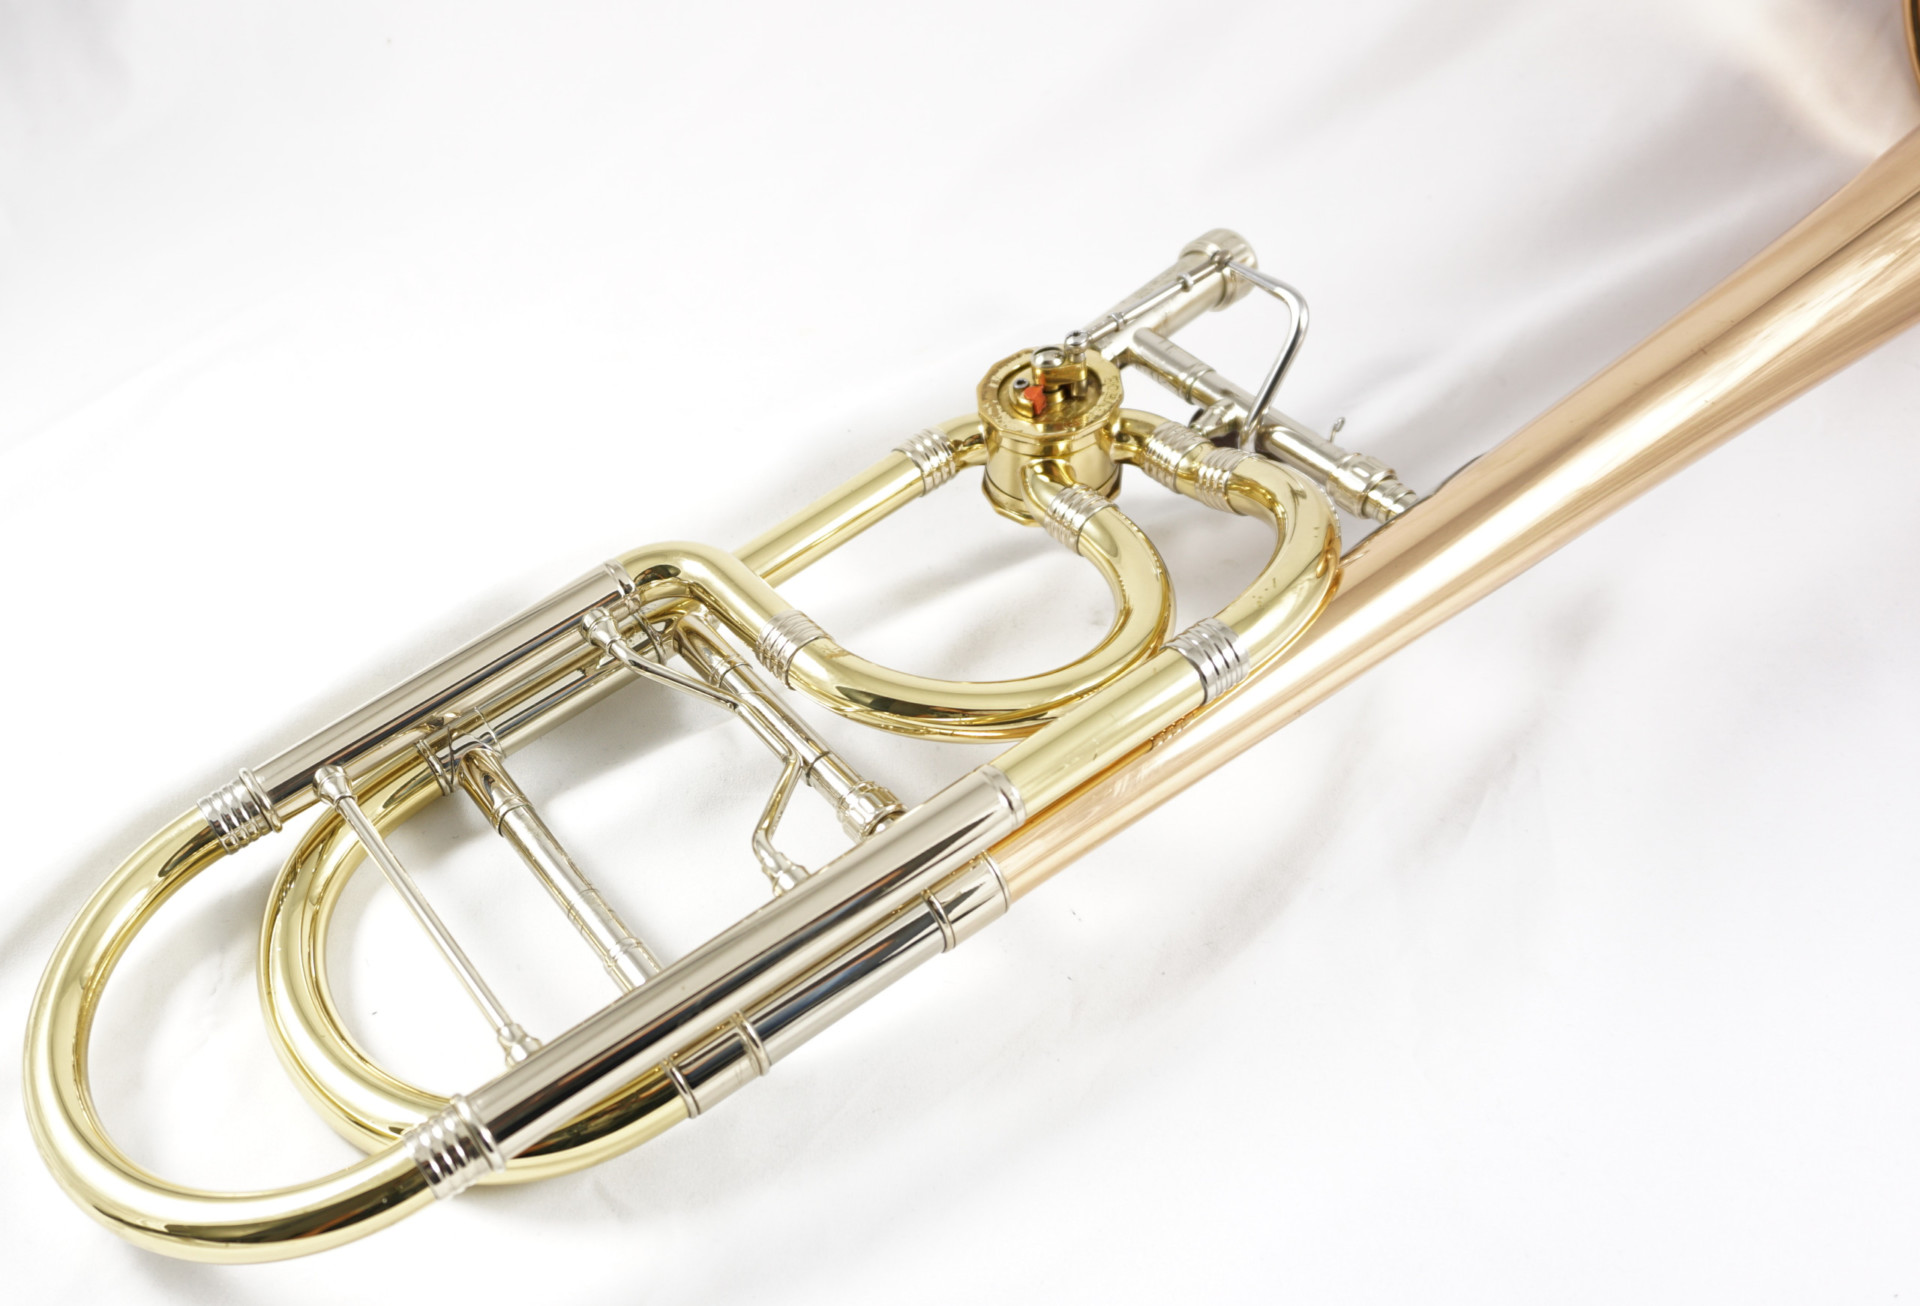 Original Greenhoe large bore tenor trombone